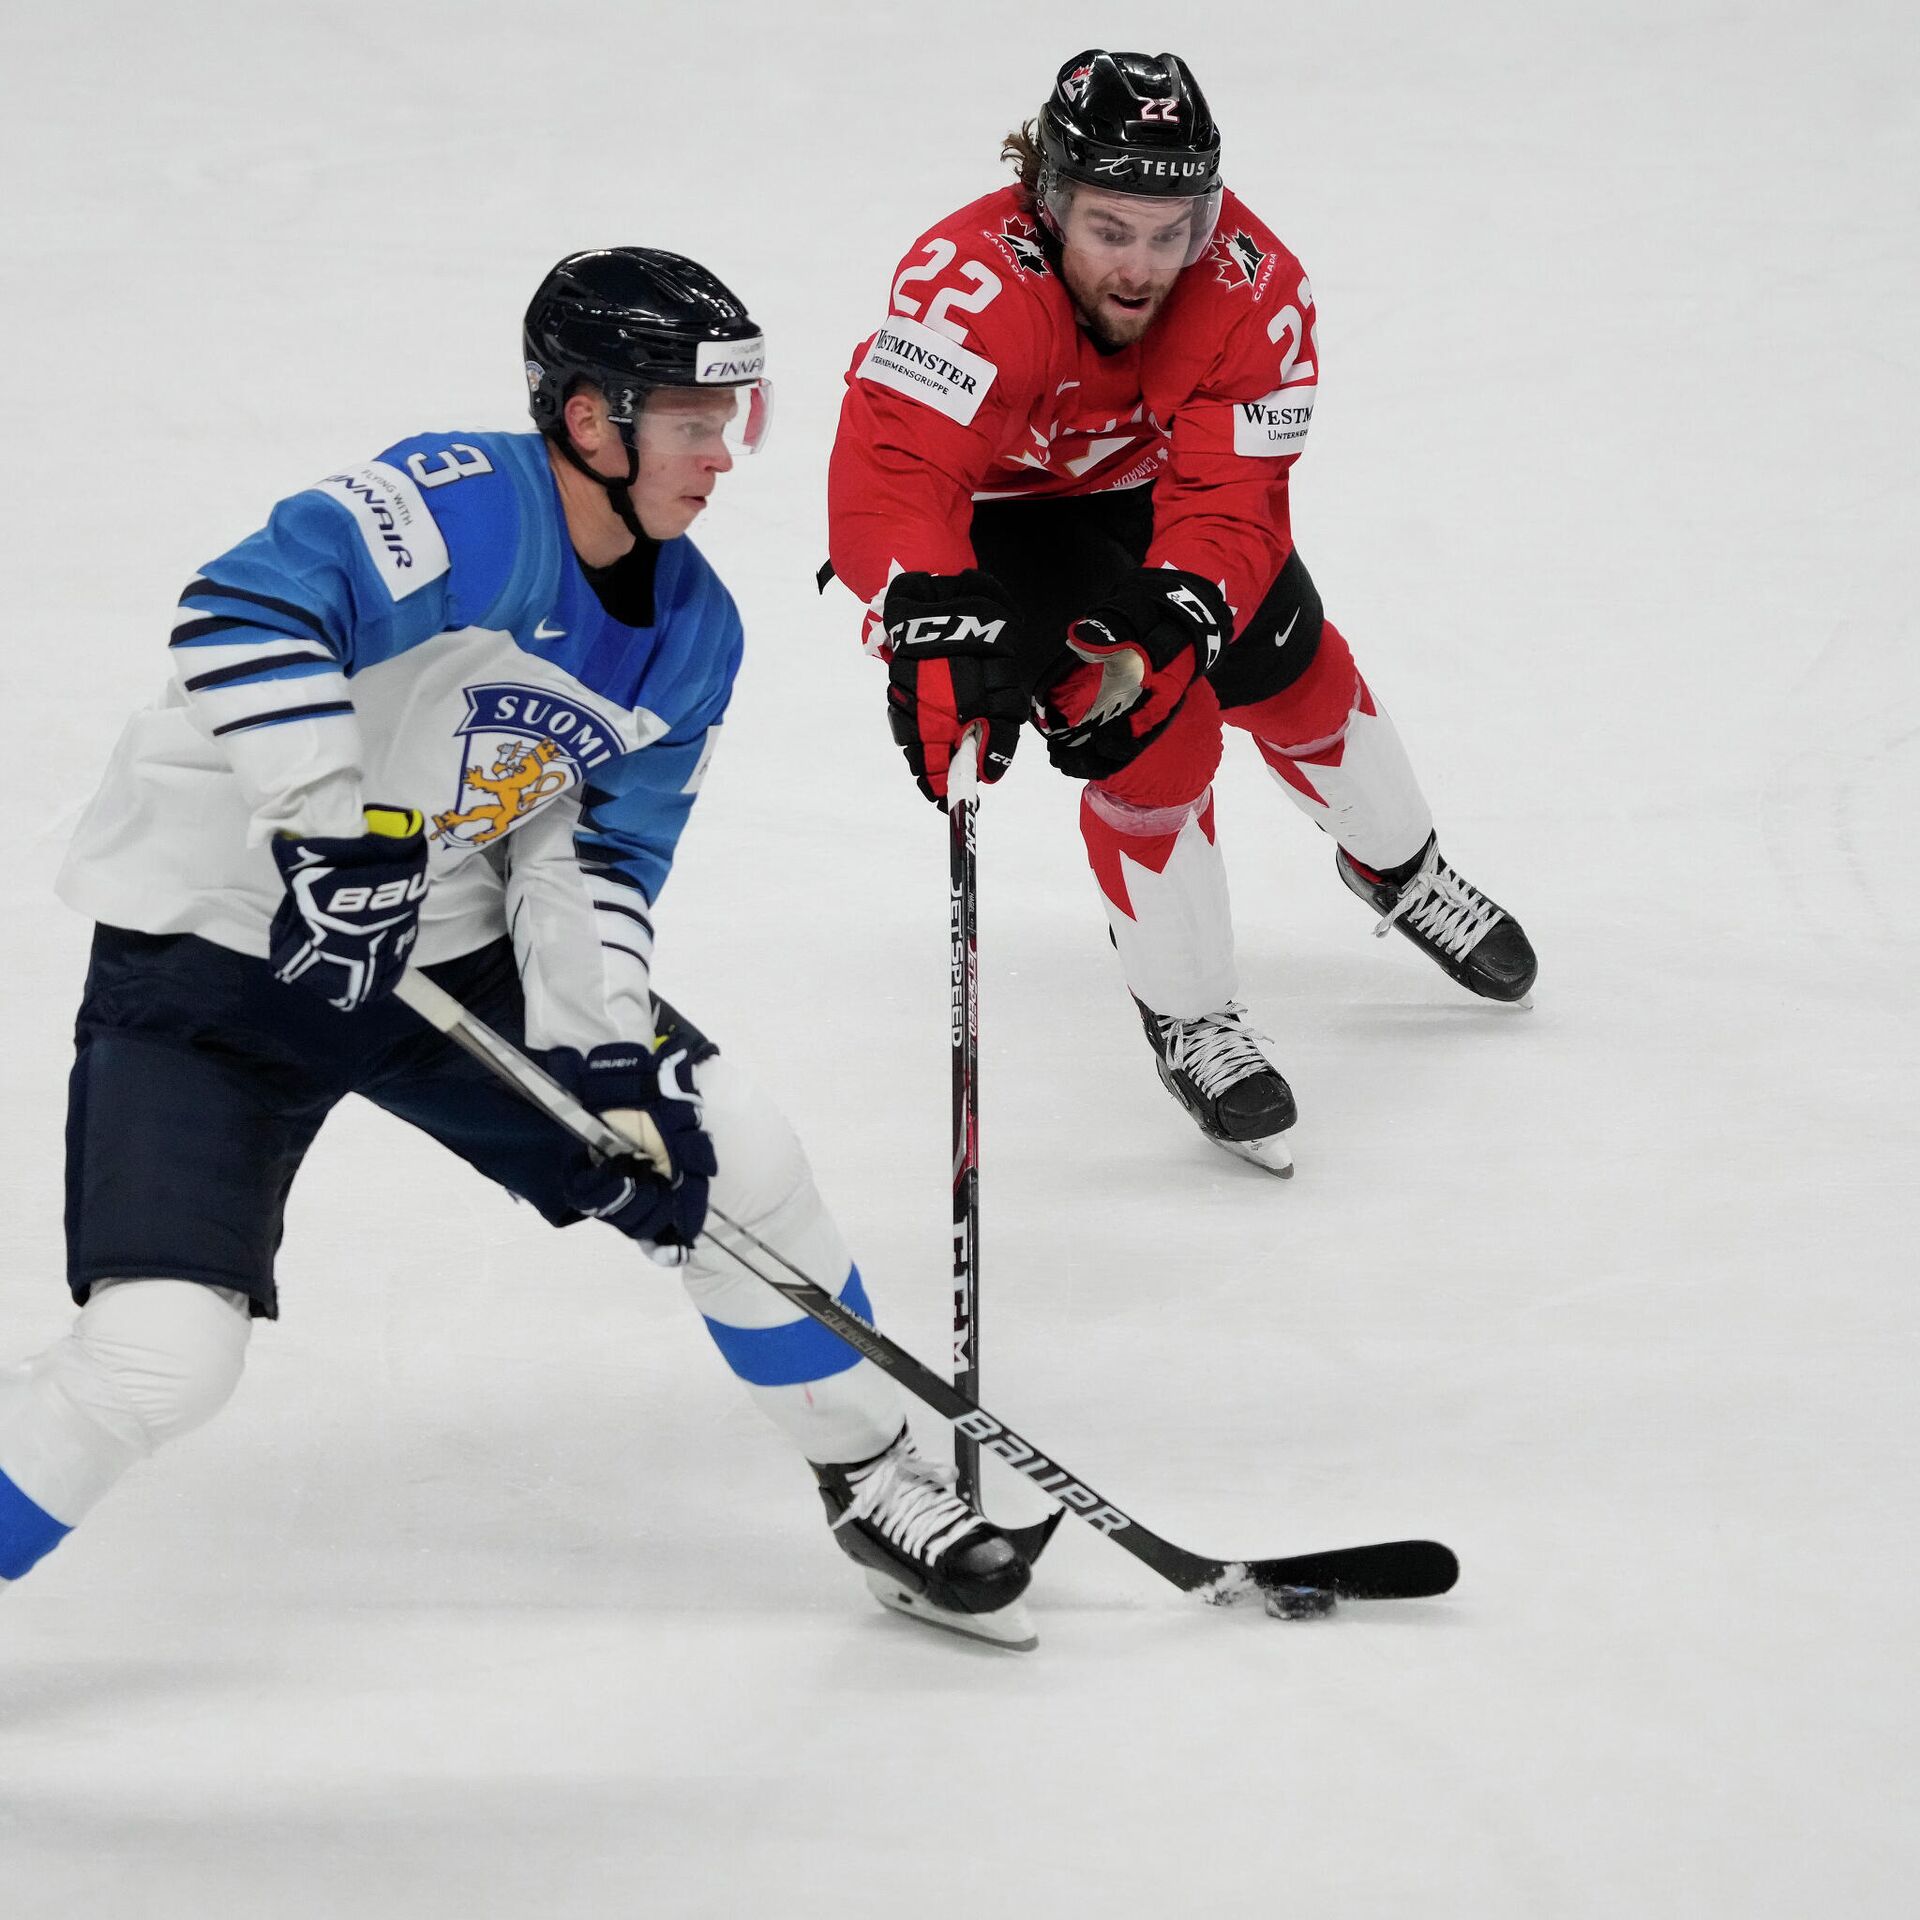 Финляндия матчи хоккей. ЧМ по хоккею 2021 Канада Финляндия. ЧМ 2021 по хоккею финал Канада Финляндия. Руотсалайнен хоккеист. Финский хоккеист Руотсалайнен.